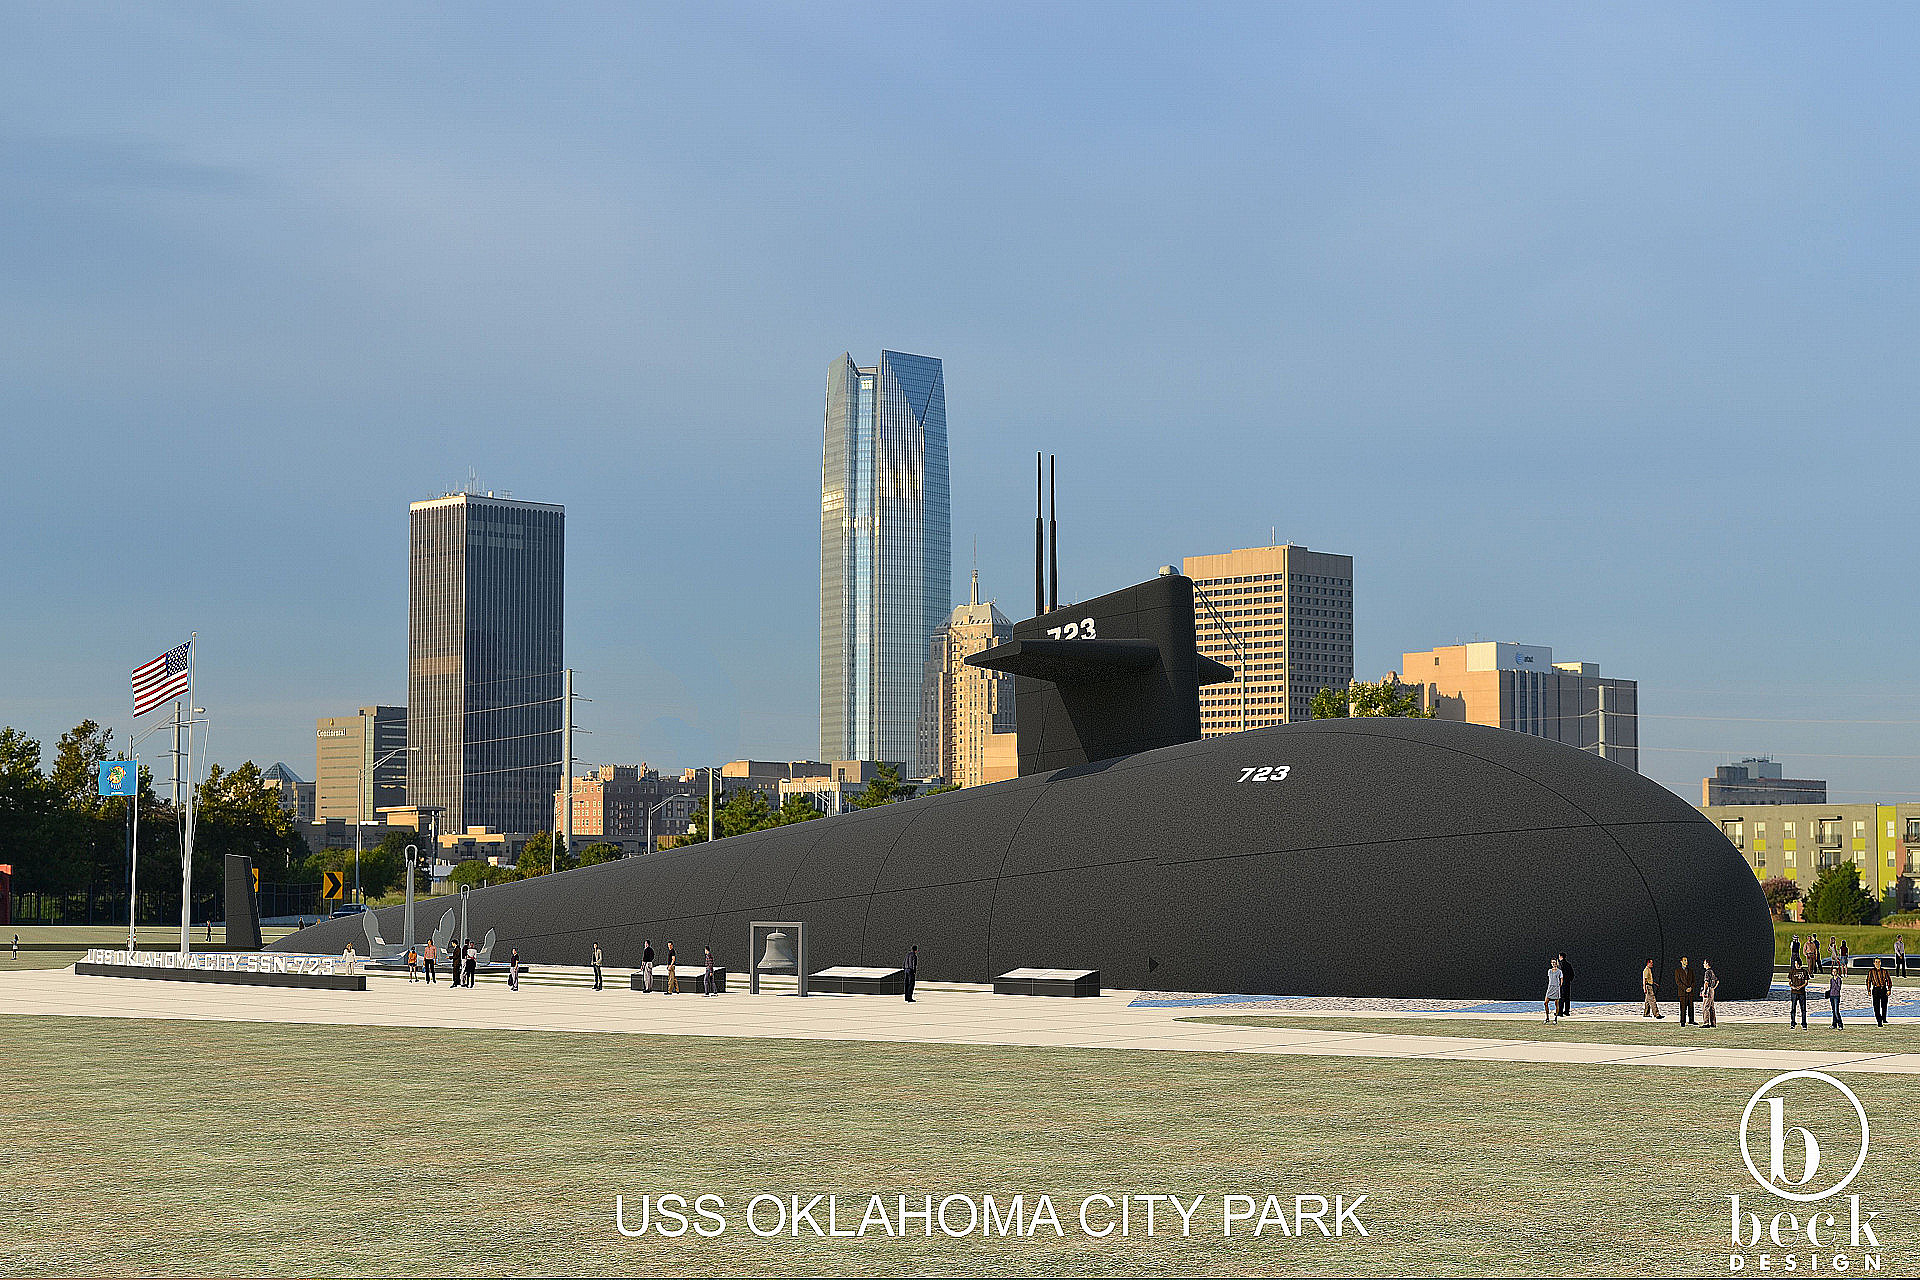 USS Oklahoma City Submarine